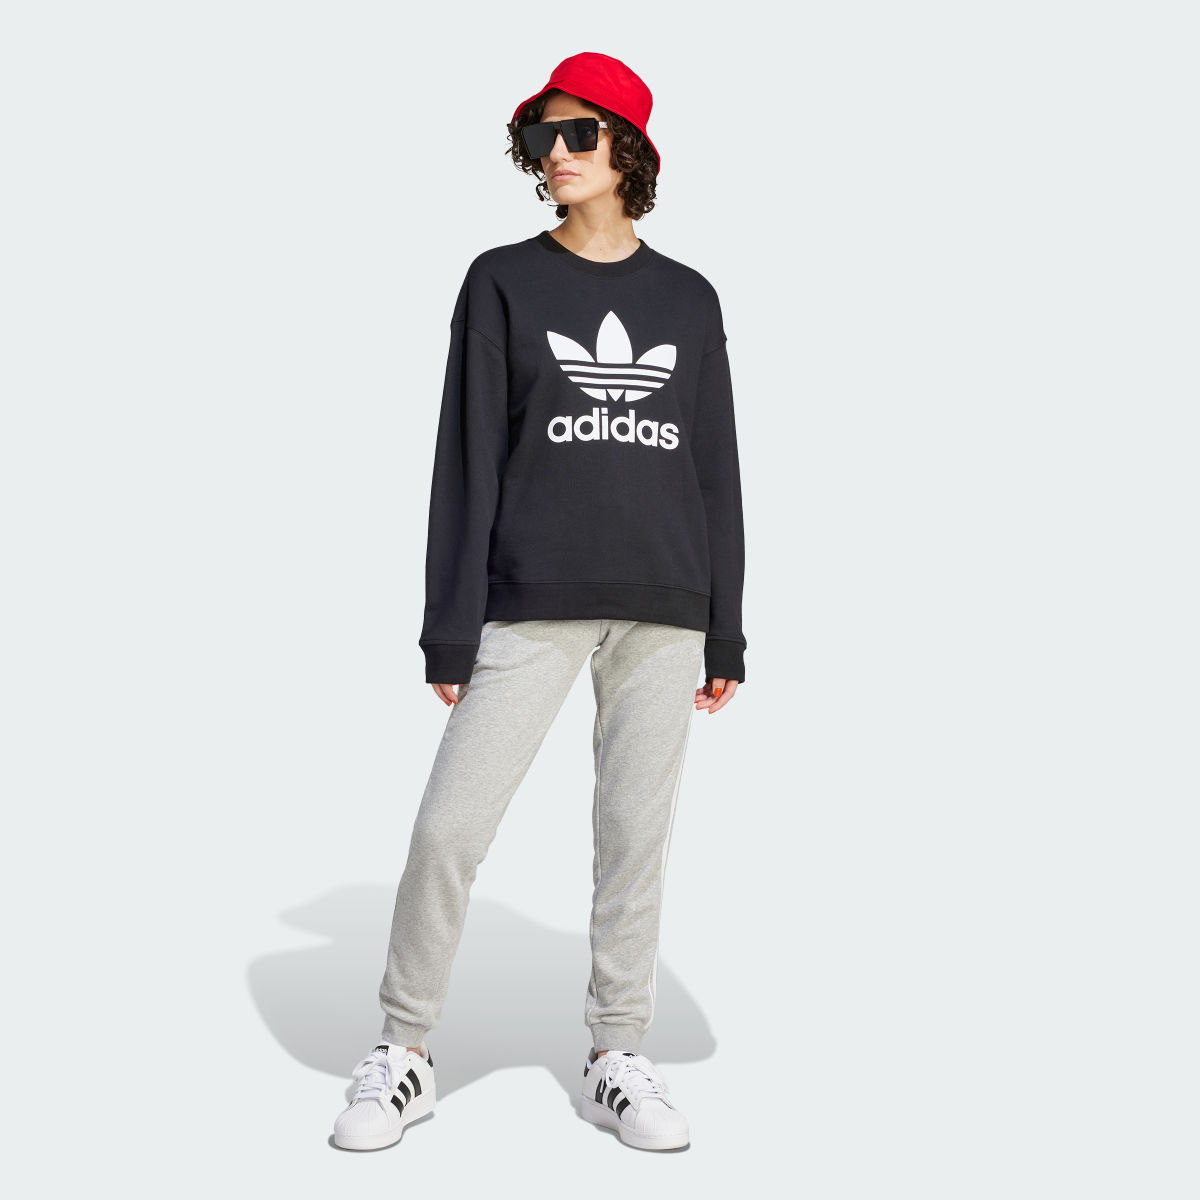 Adidas Trefoil Sweatshirt. 4